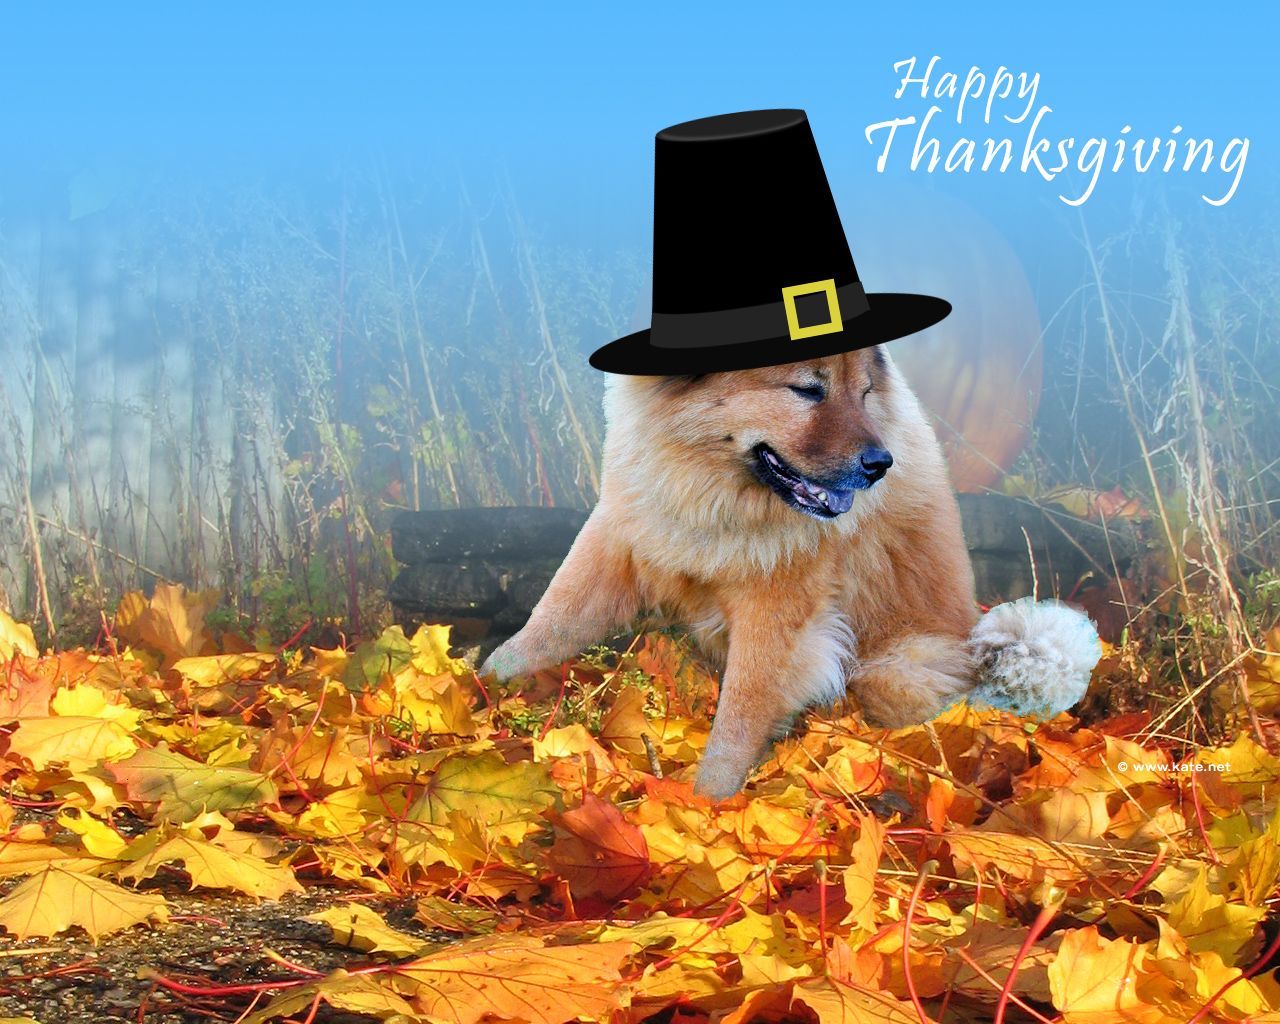 Thanksgiving Wallpaper. Happy thanksgiving wallpaper, Thanksgiving wallpaper, Thanksgiving image